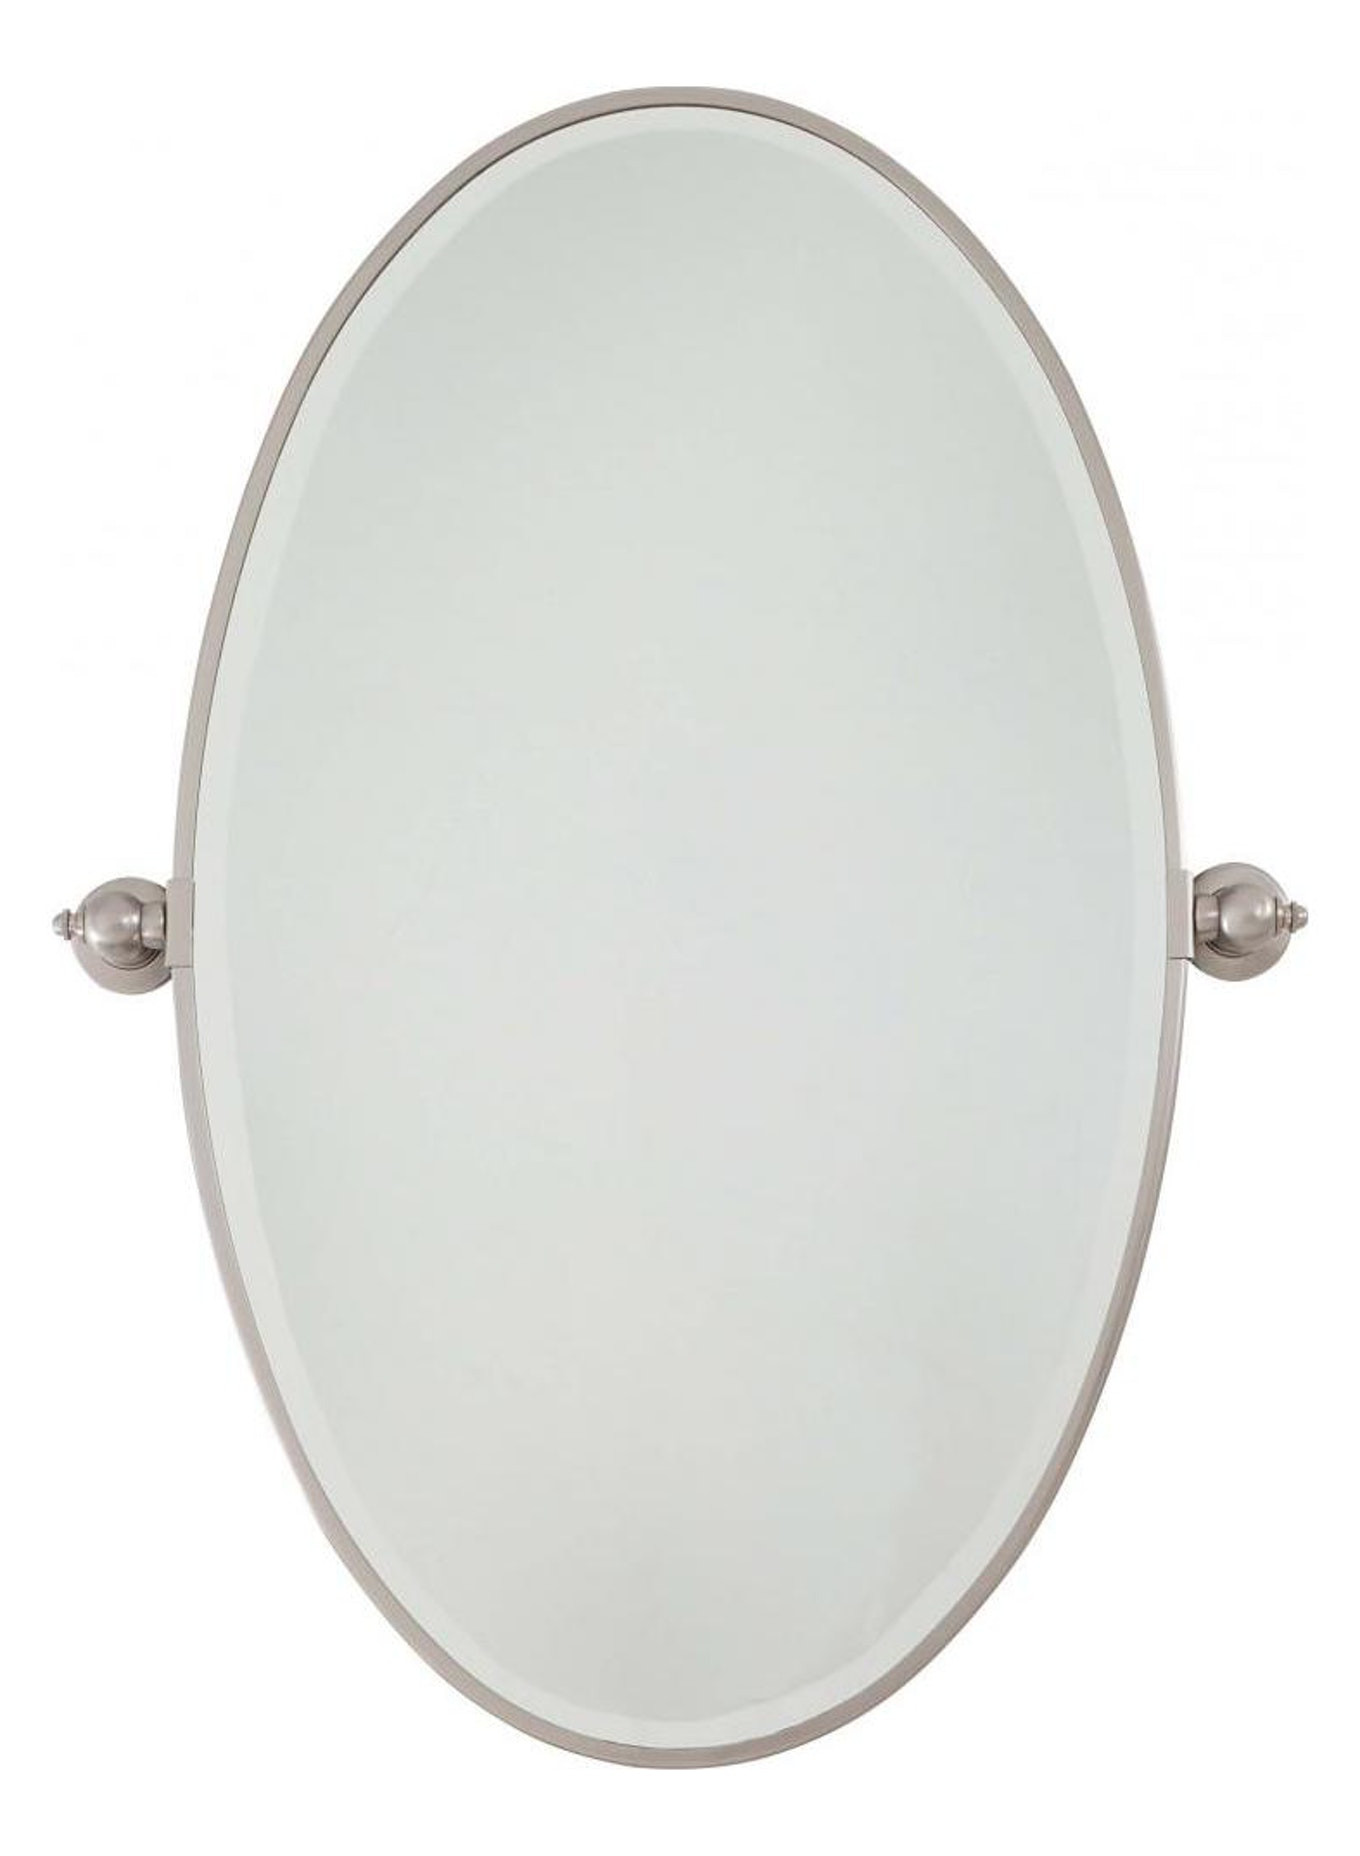 Best ideas about Brushed Nickel Bathroom Mirror
. Save or Pin Bathroom Vanity Mirrors Brushed Nickel Wonderful Brushed Now.